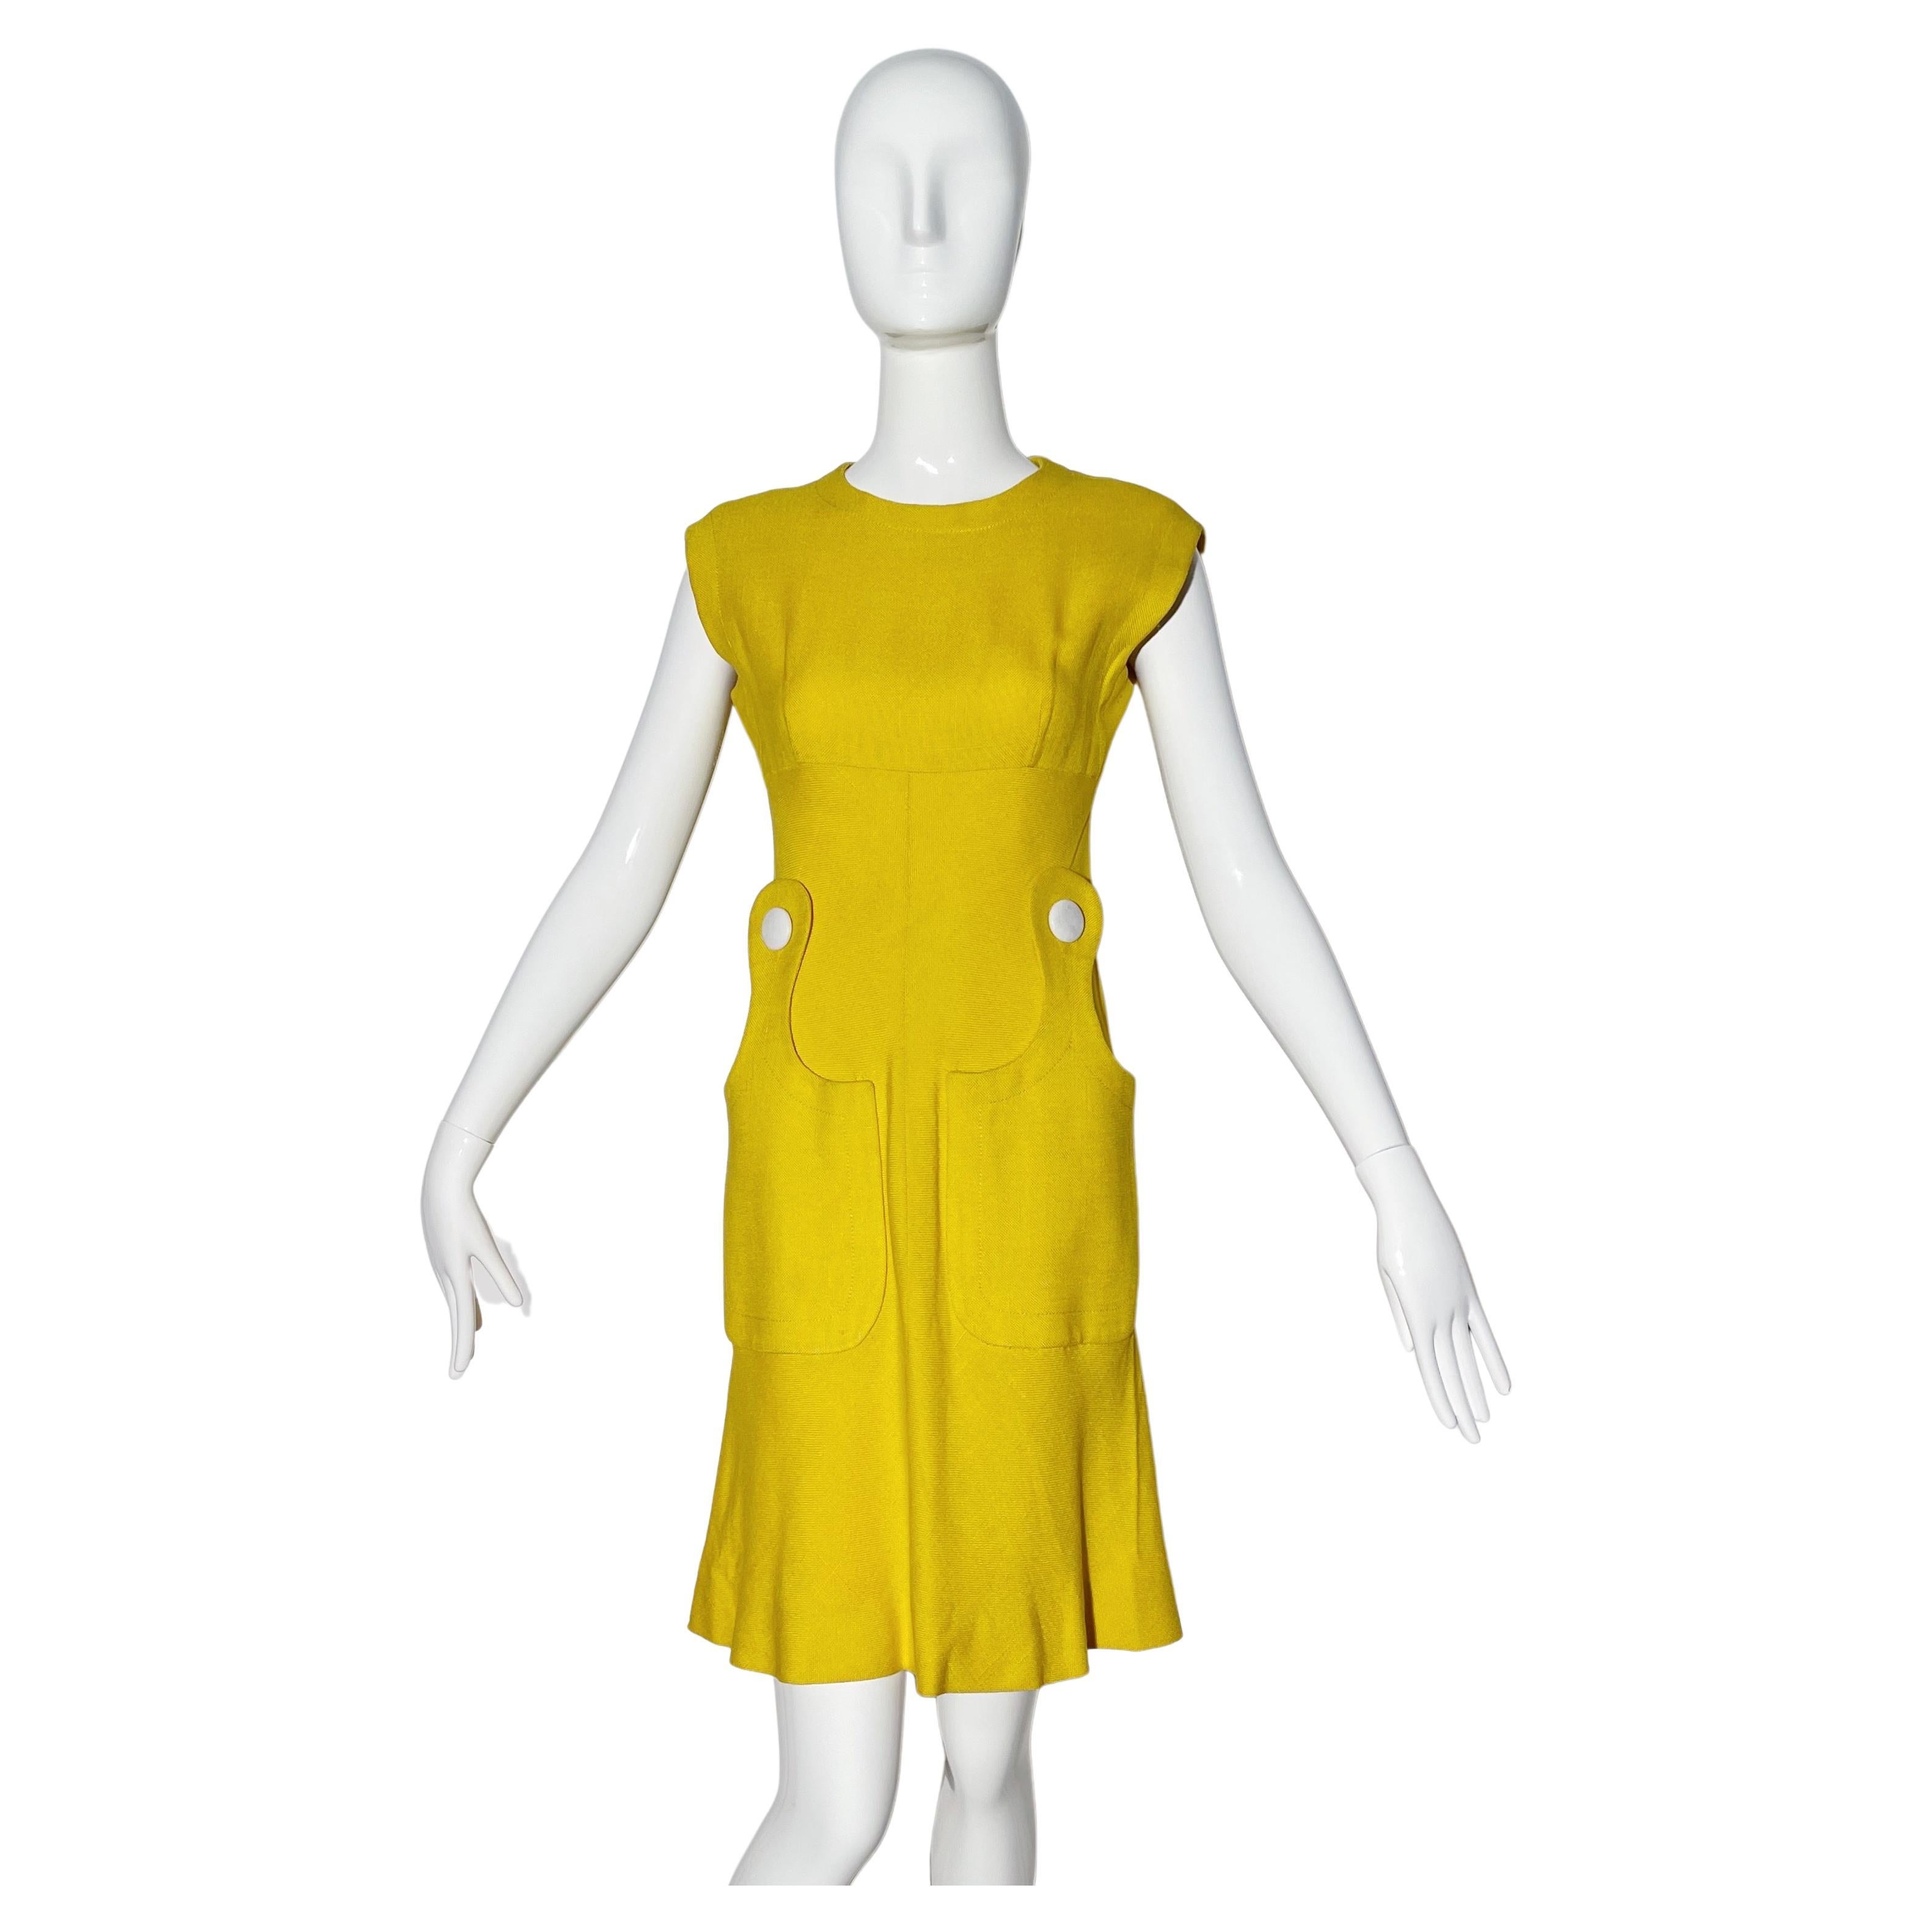 Pierre Cardin - Robe modulaire jaune 